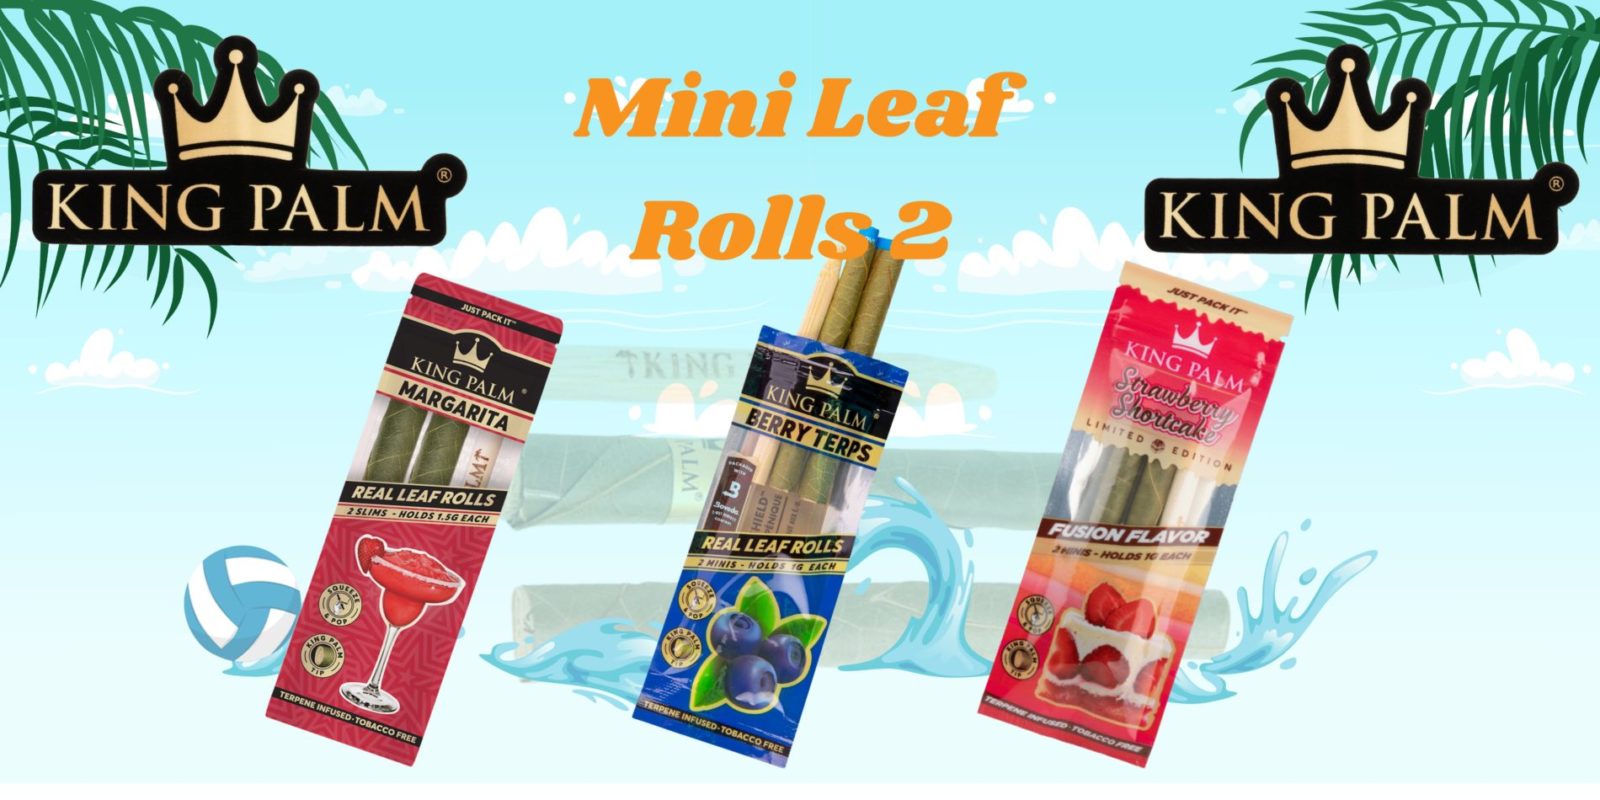 King Palm Mini Leaf Rolls 2 – Strawberry Shortcake 420 SUPPLIES - XMANIA Ireland 14